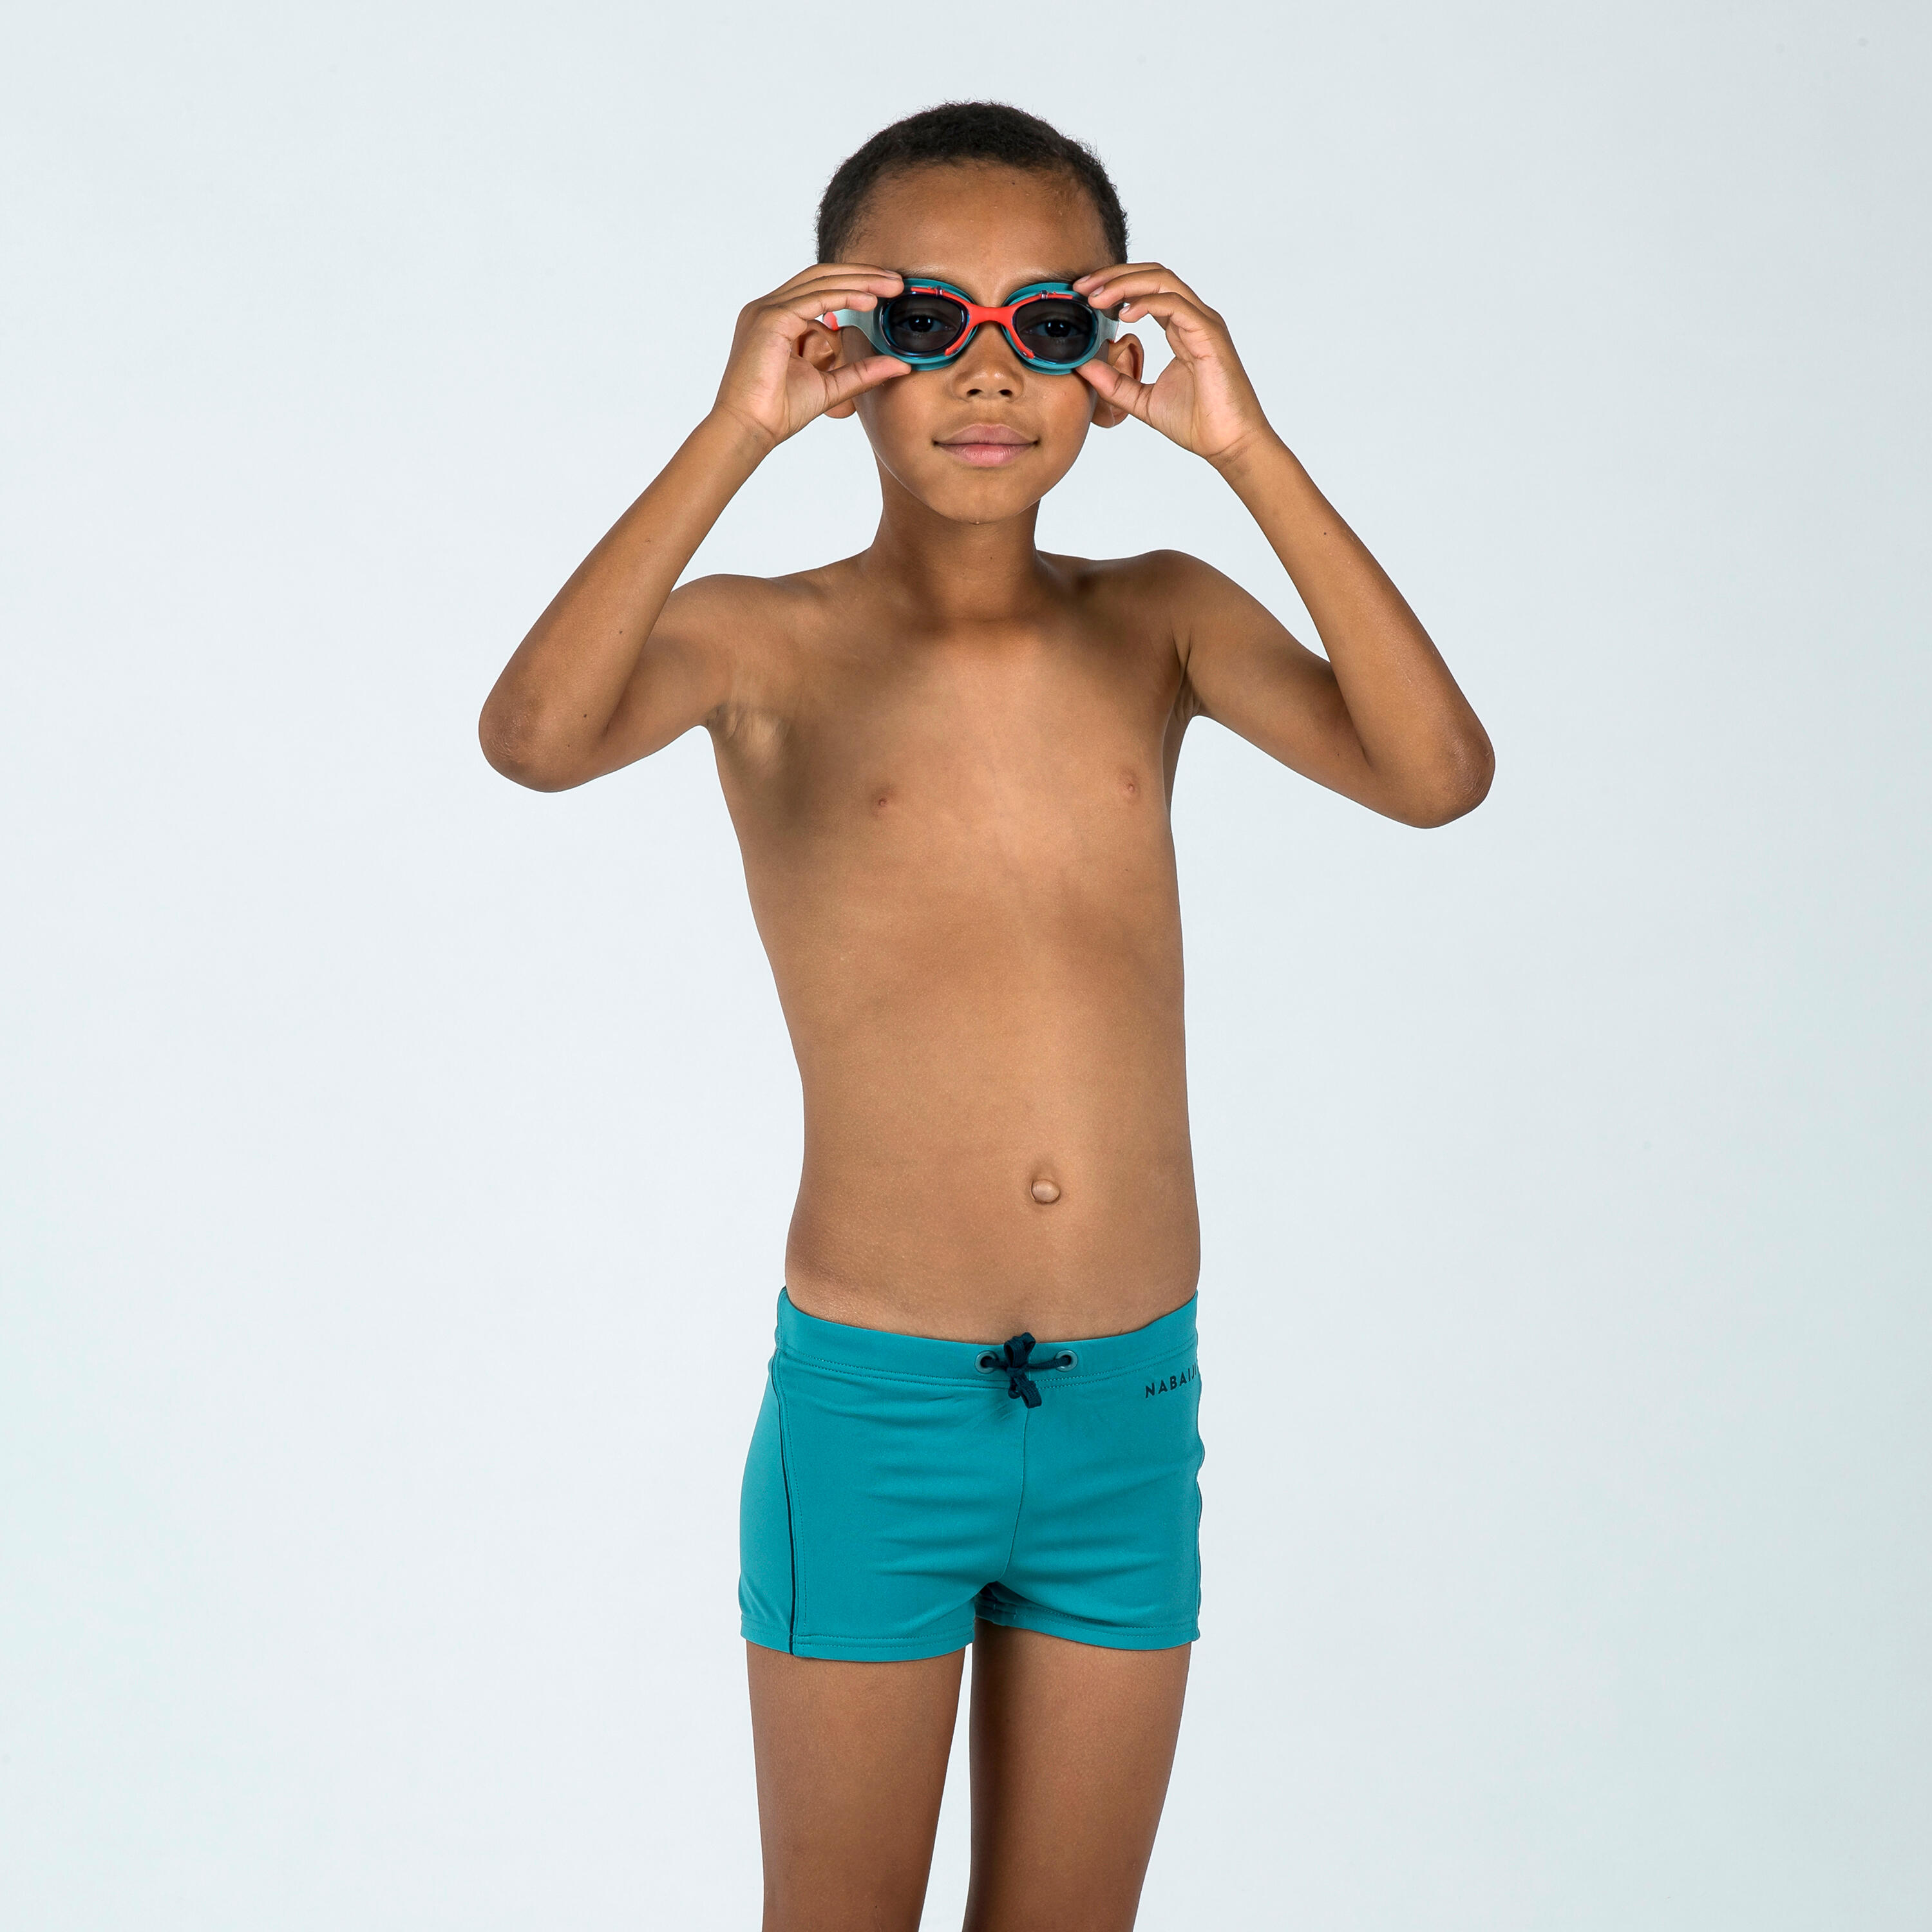 Swimming goggles XBASE - Clear lenses - Kids' size - Green orange 8/9